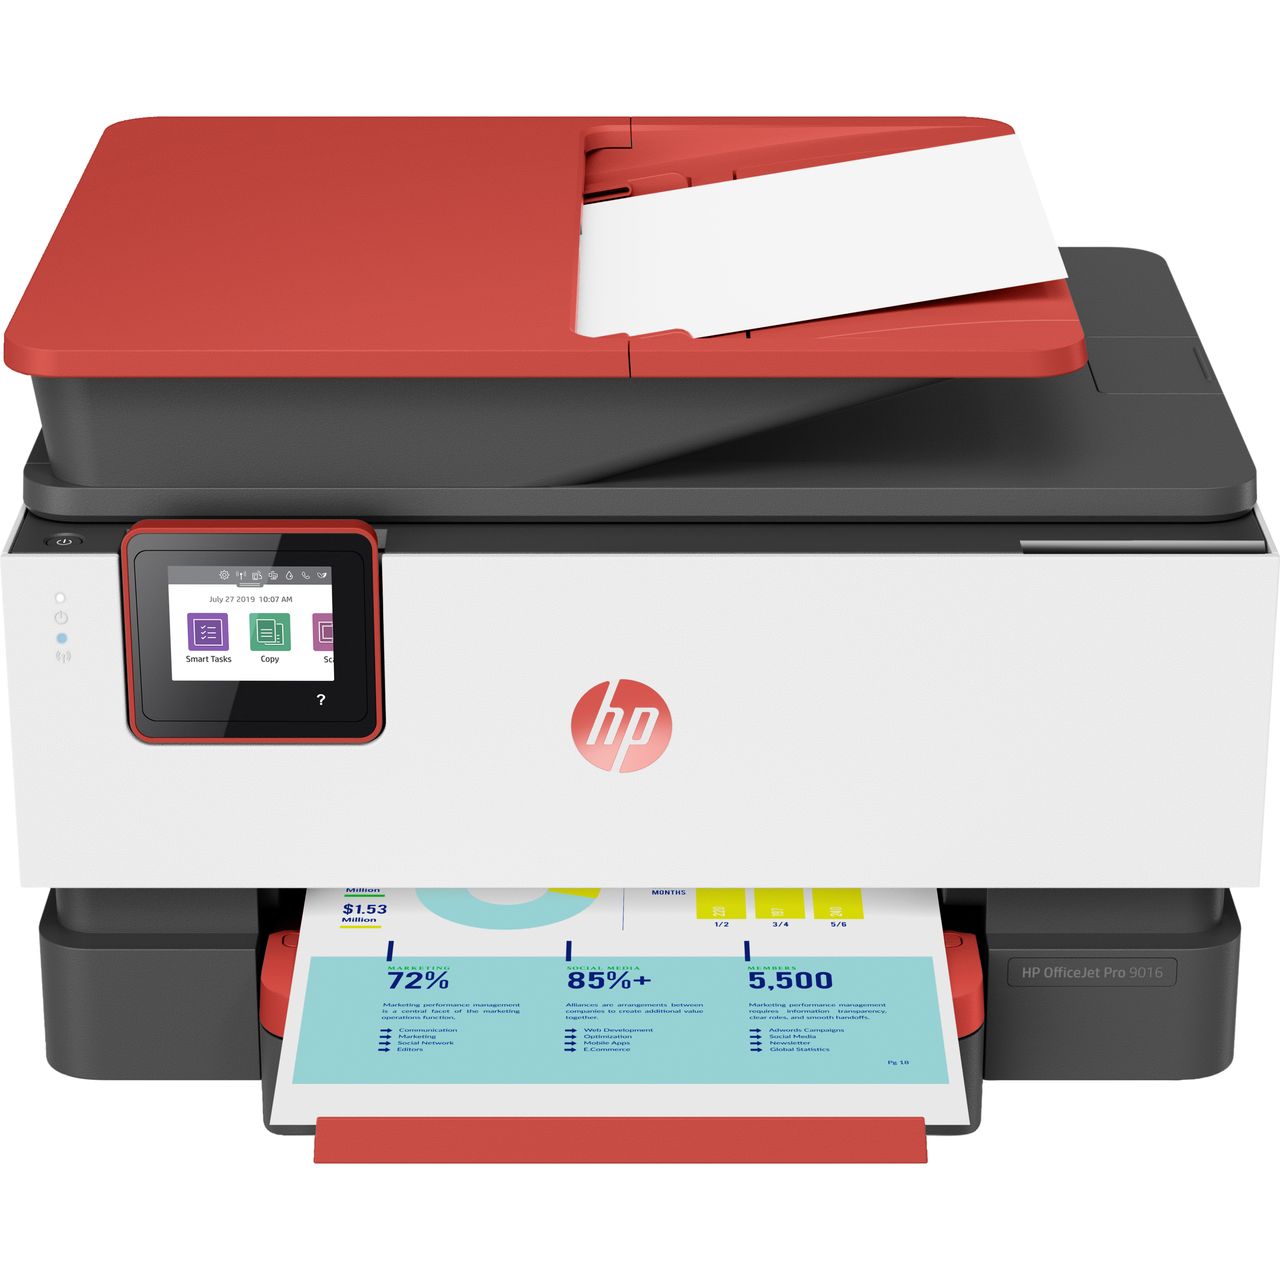 HP OfficeJet Pro 9012 Inkjet Printer Review